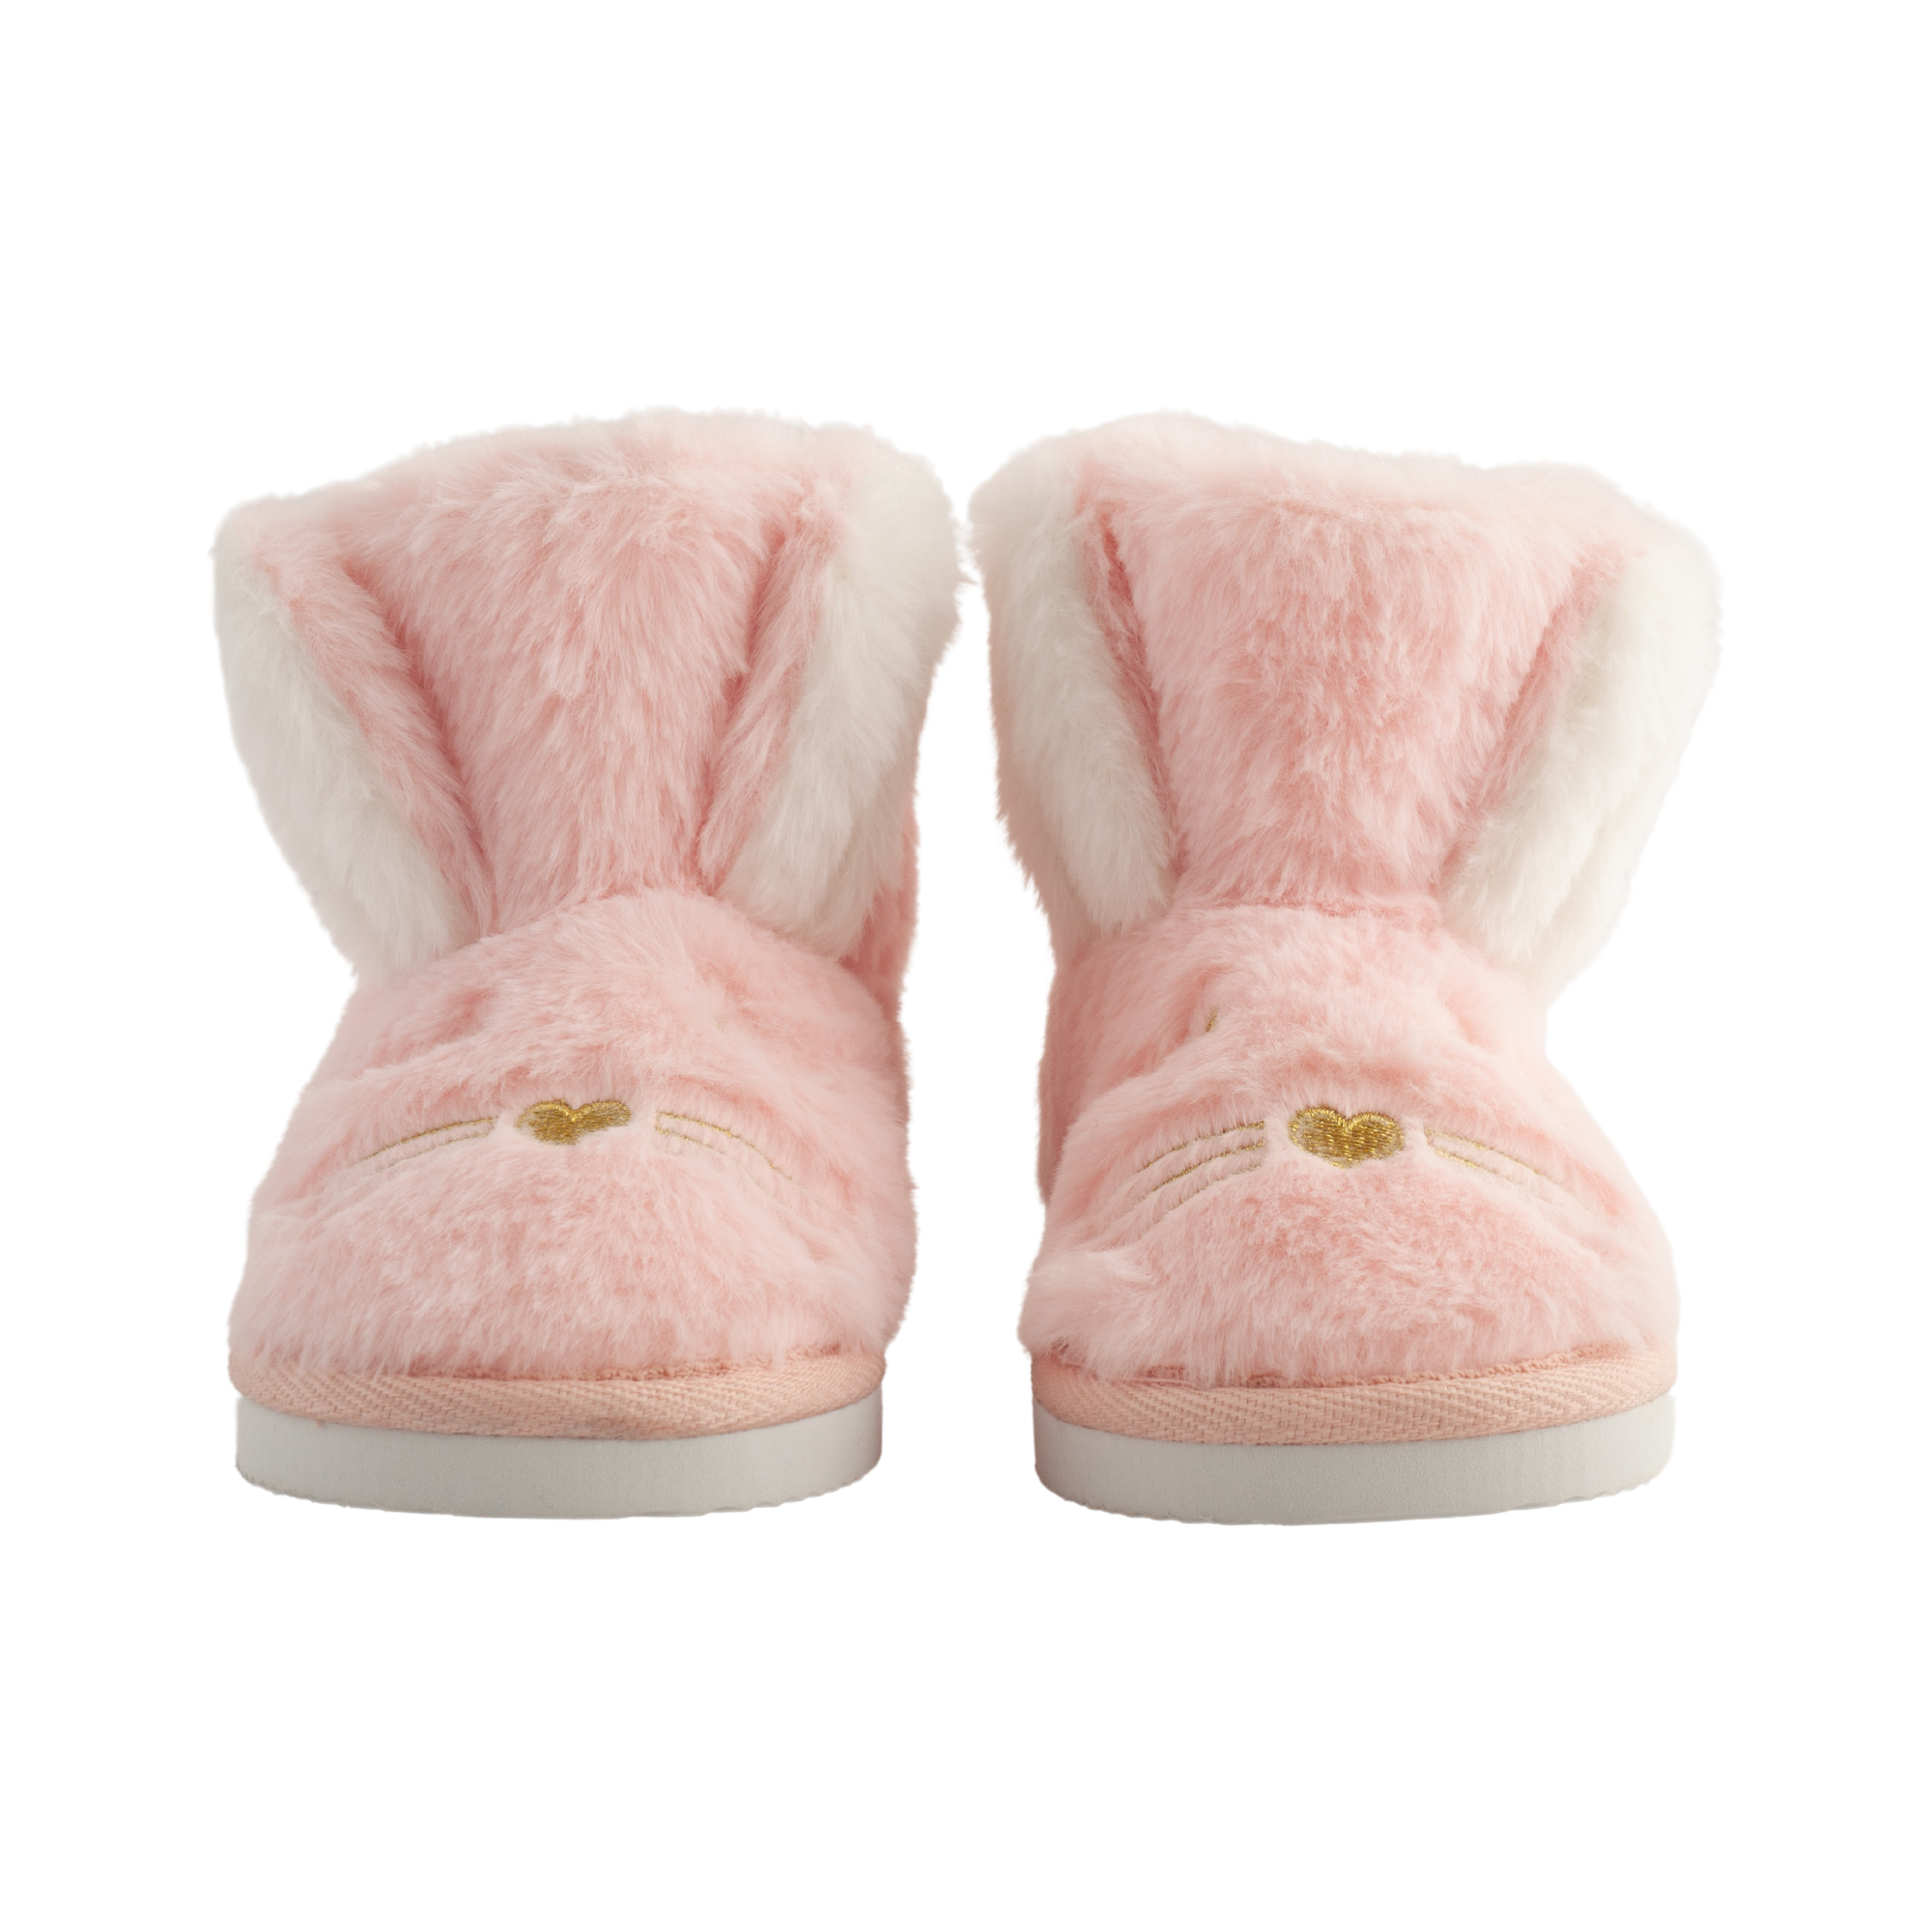 Novelty Slipper Boot - Pink Bunny Size 13-1